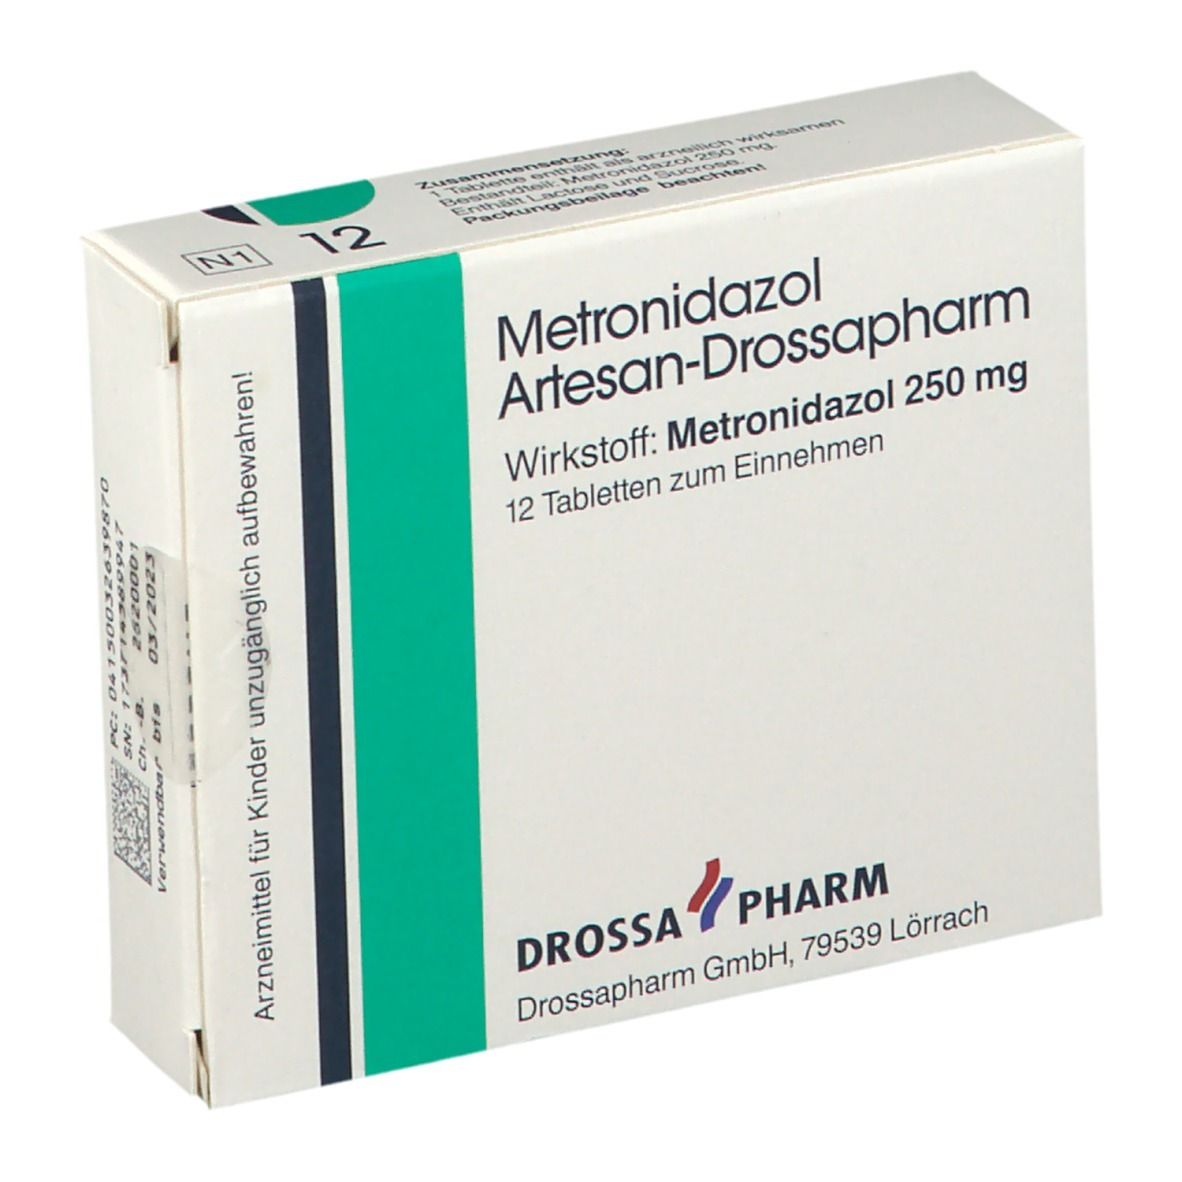 Metronidazol Artesan-Drossapharm mg 12 -